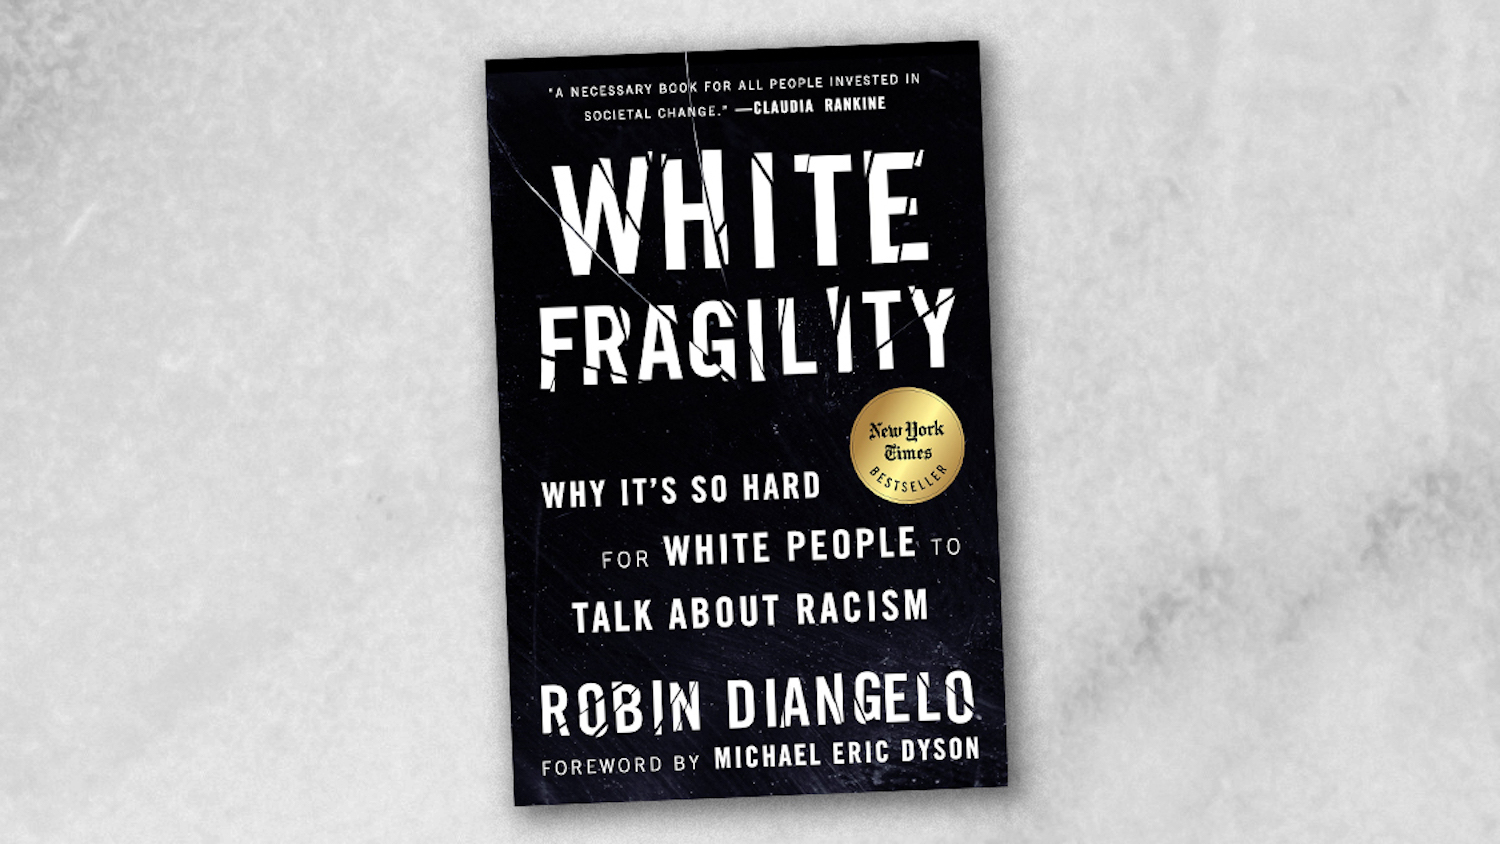 White fragility book